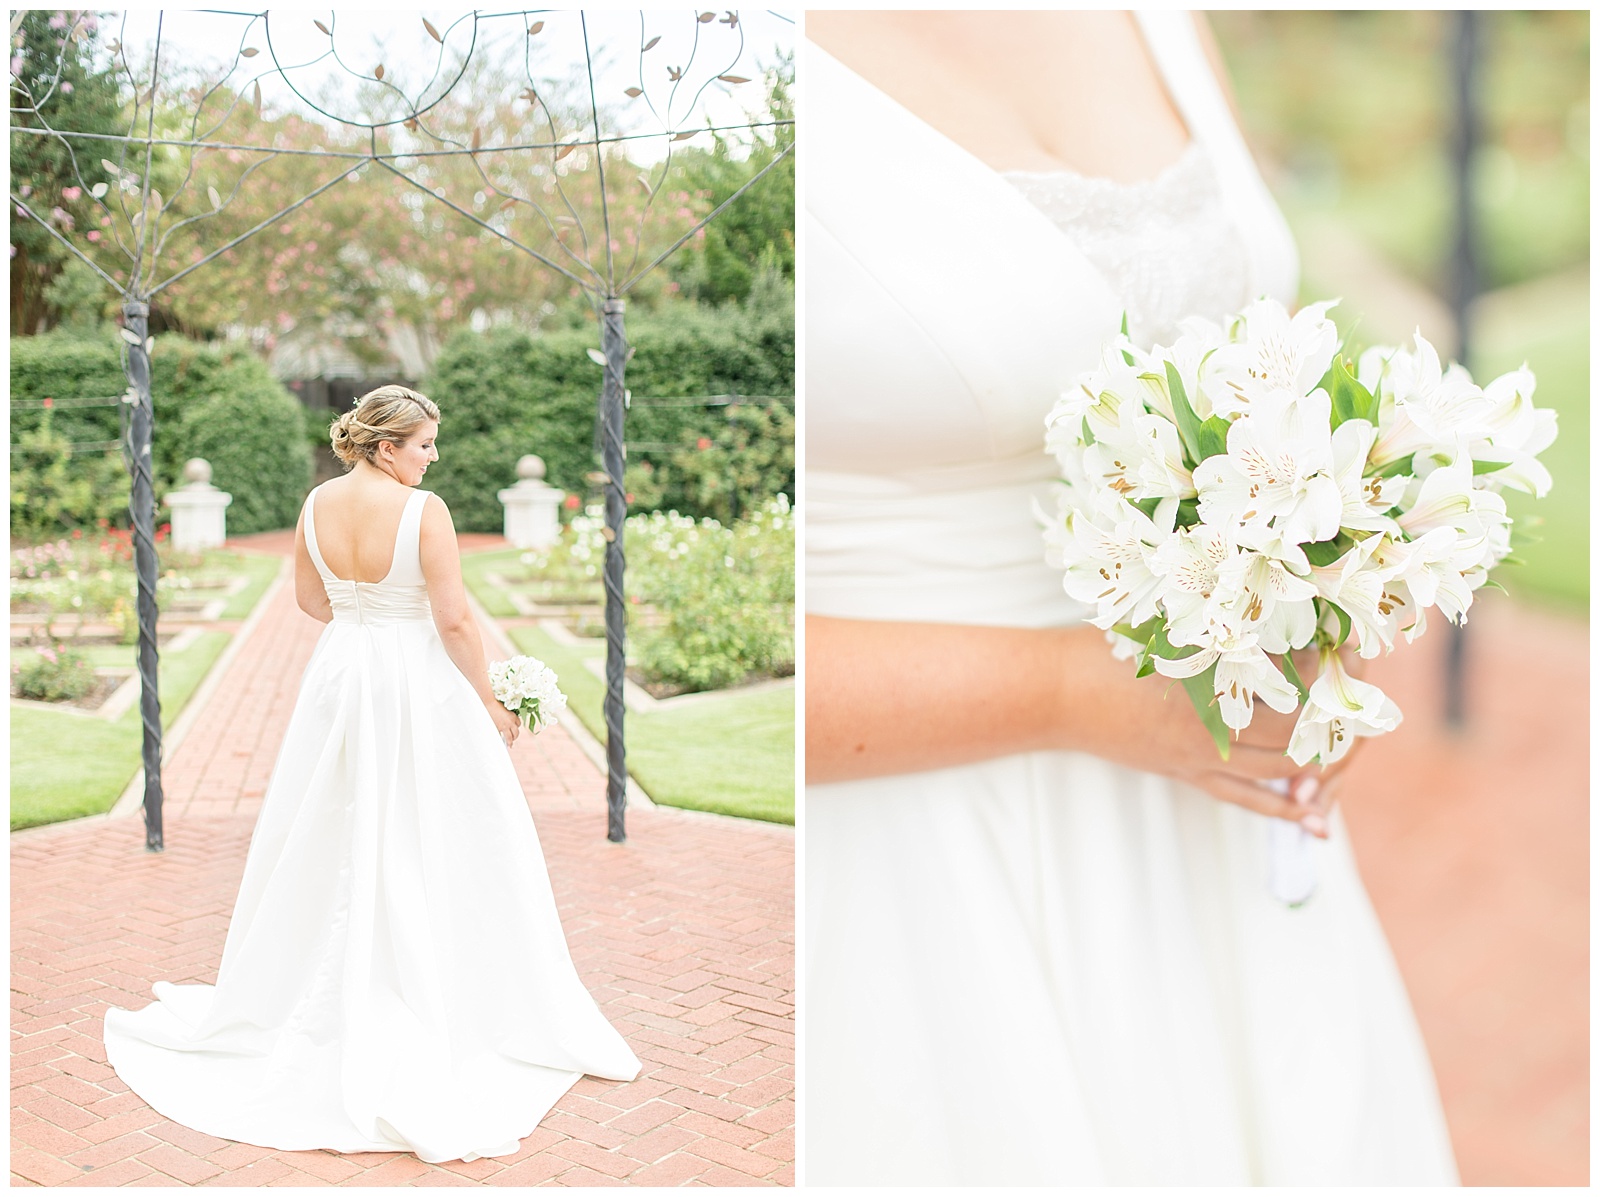 Wedding Photographers in Birmingham, Alabama - Bridal Session Tips Katie & Alec Photography 4